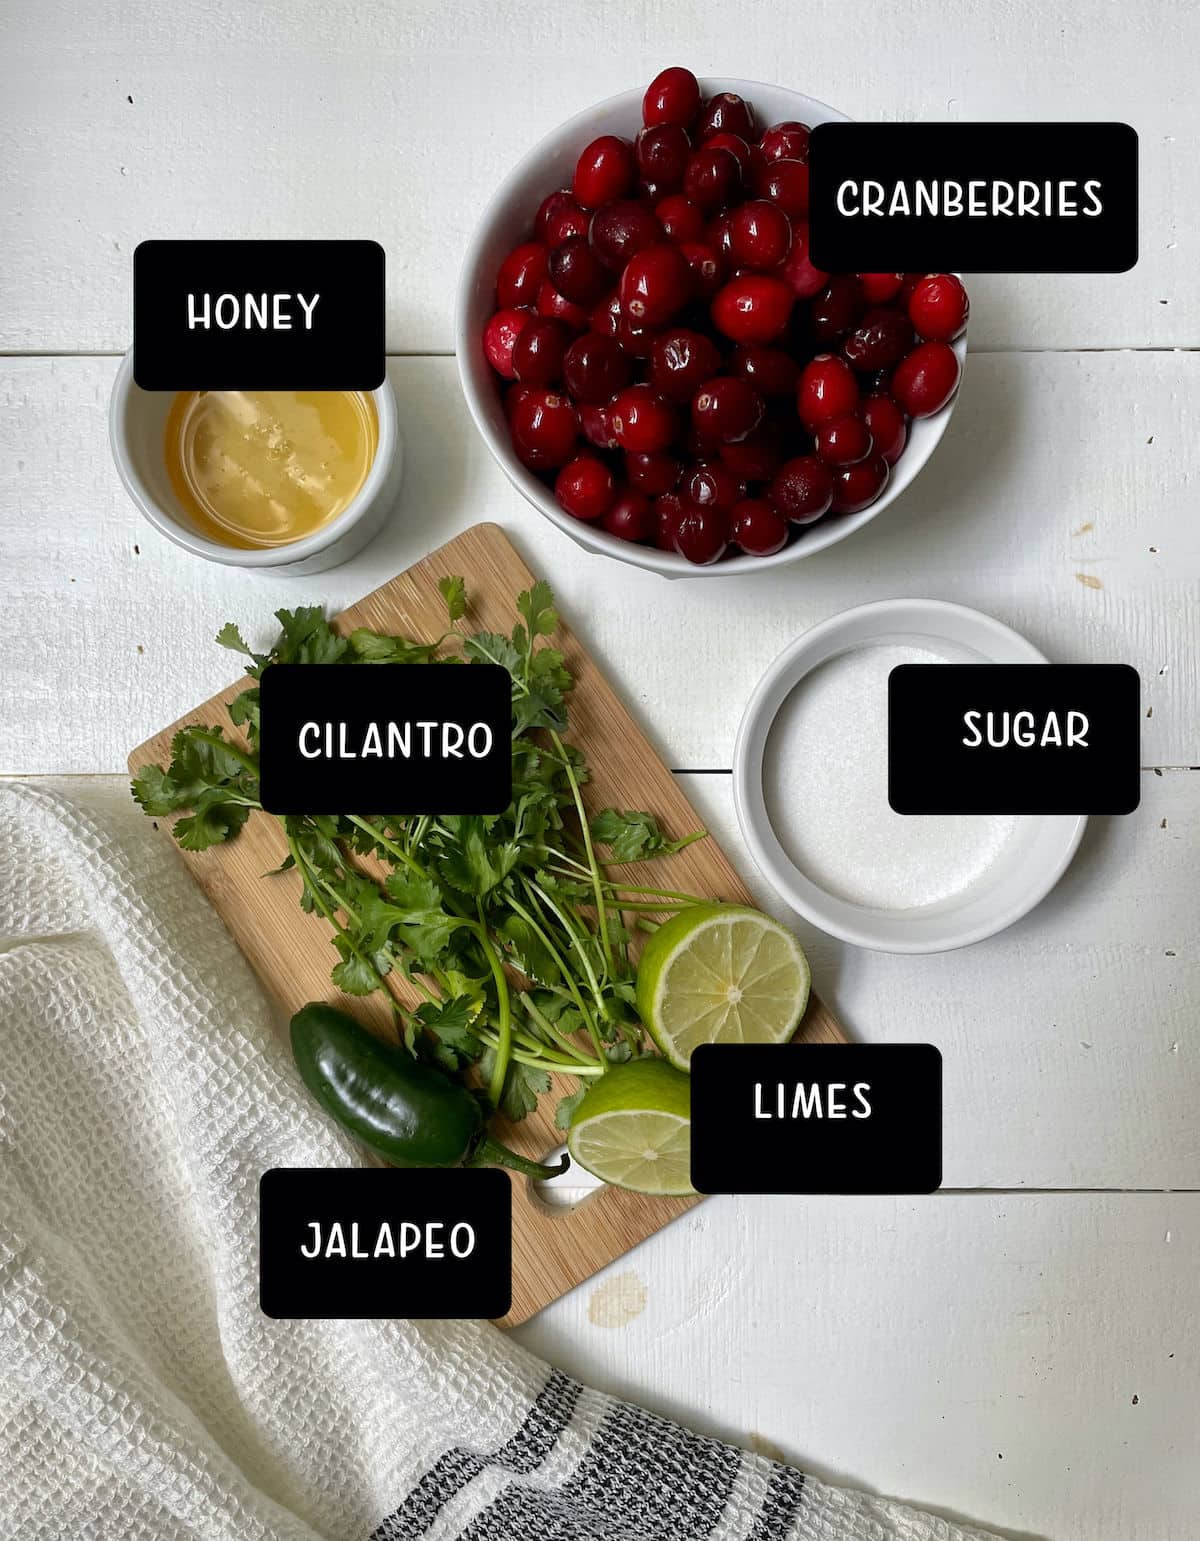 Honey, cranberries, cilantro, lines, jalapeño, and sugar to make salsa.